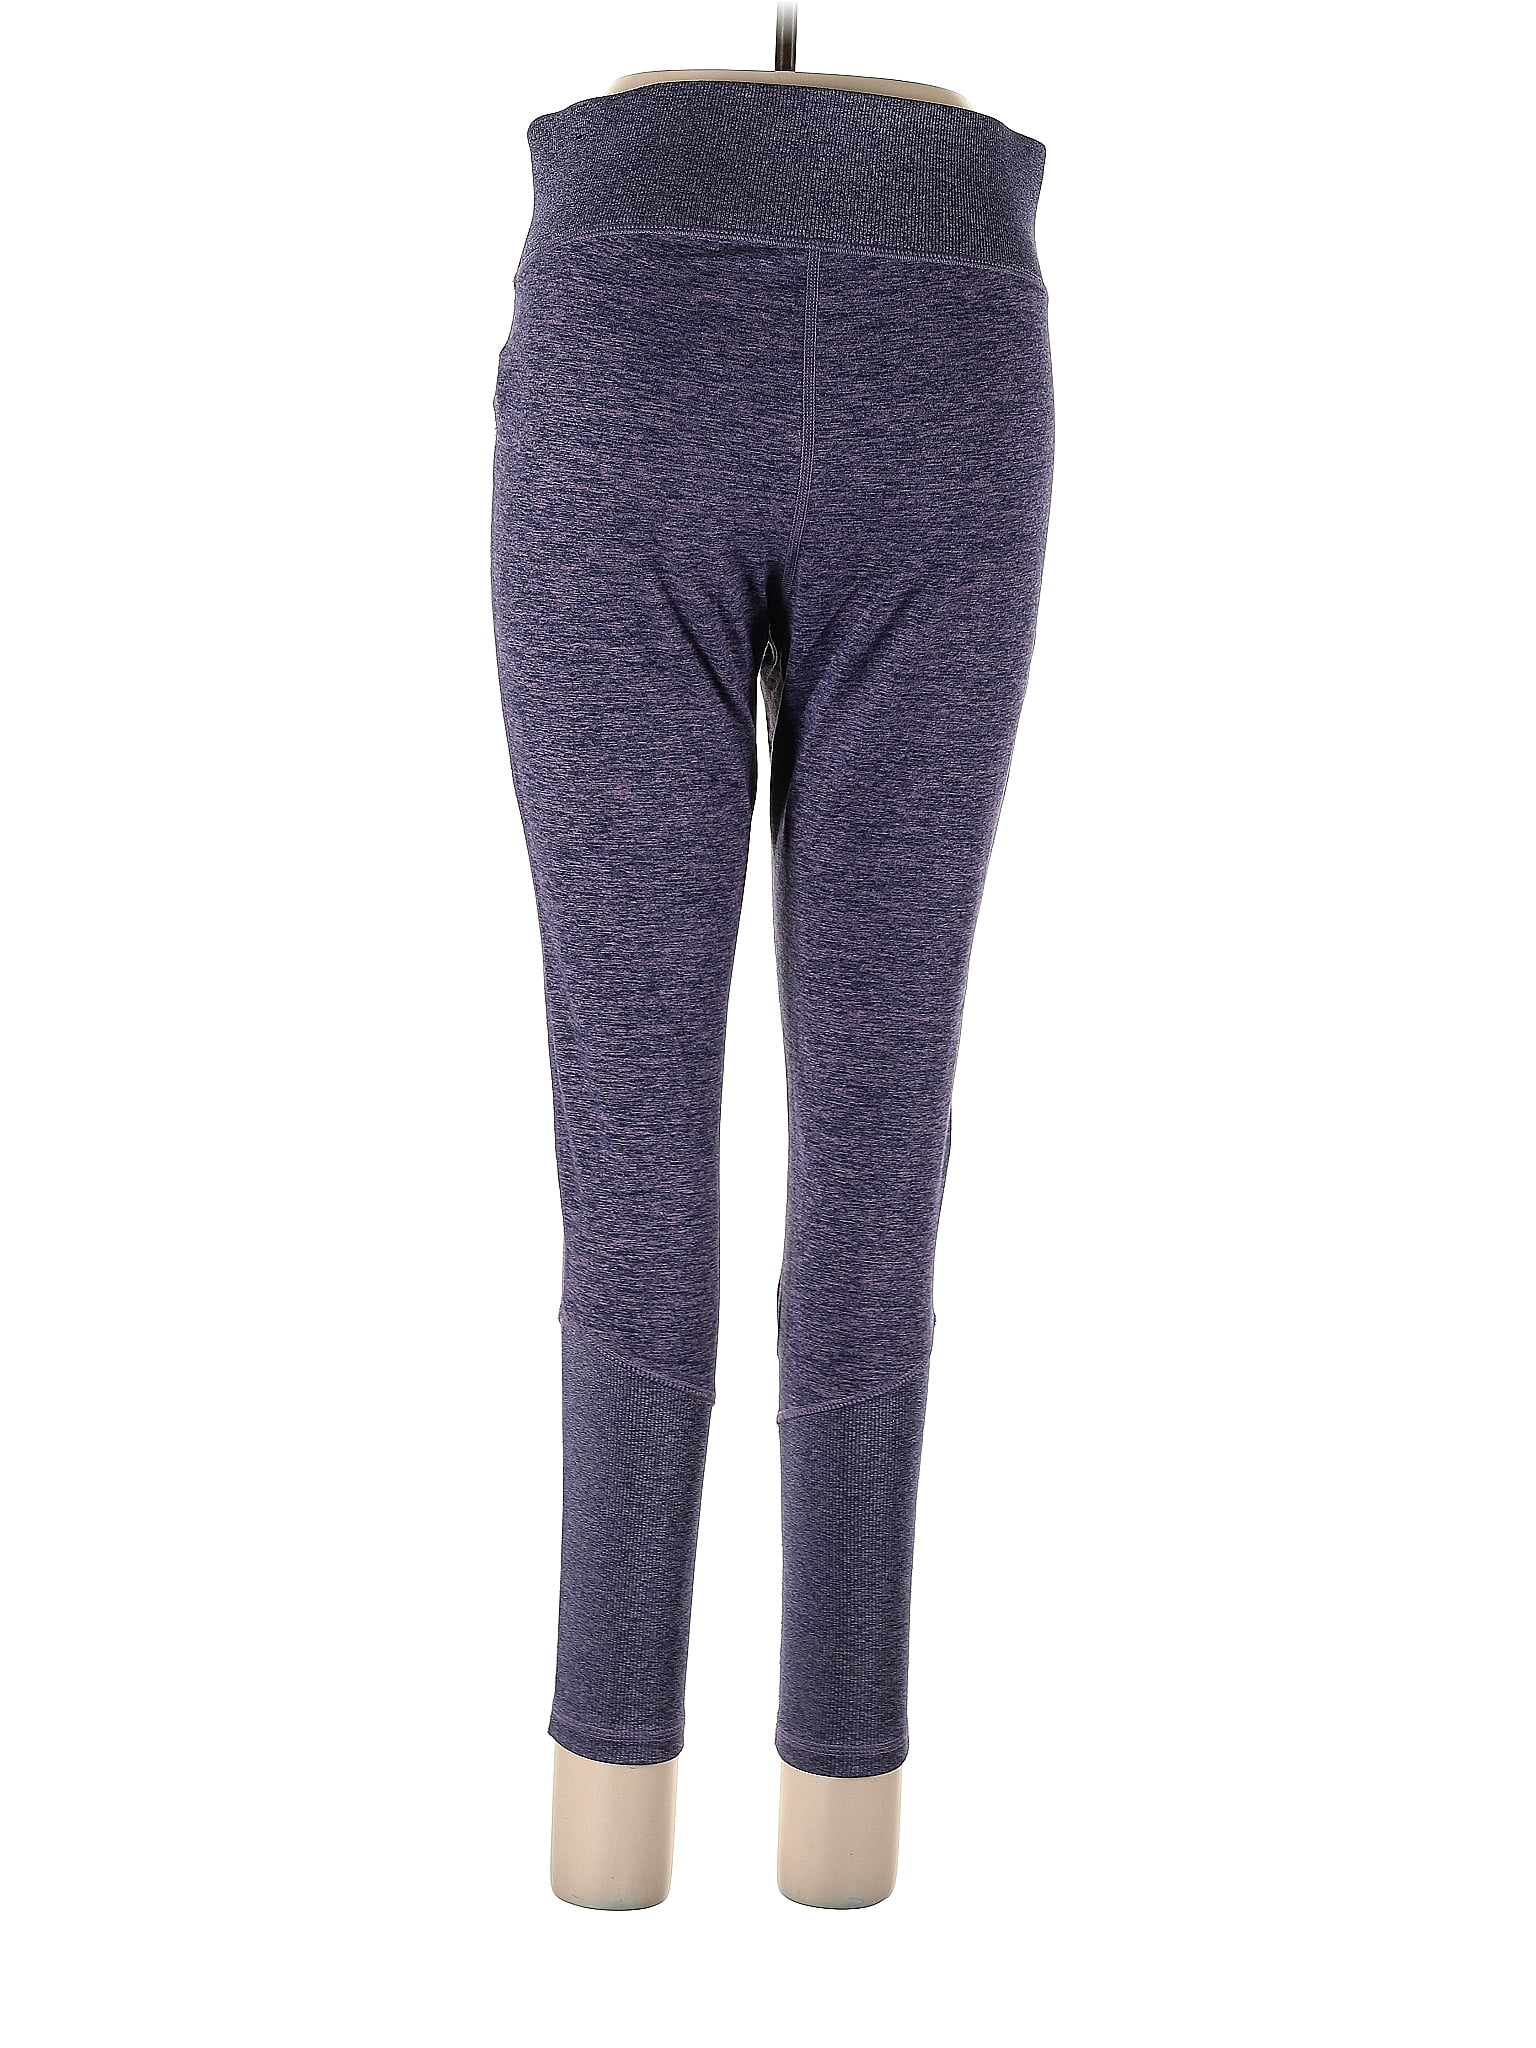 Calia by Carrie Underwood Purple Active Pants Size L - 62% off